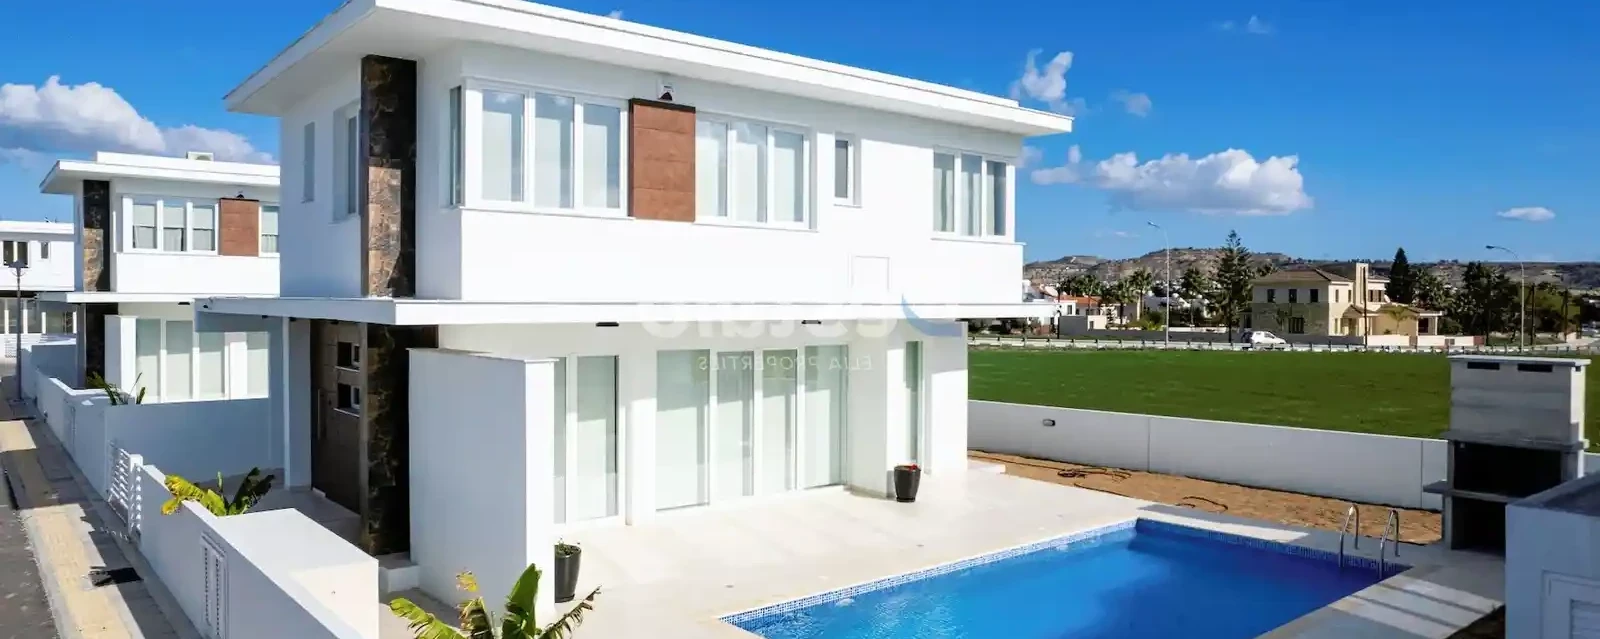 3-bedroom villa fоr sаle €580.000, image 1